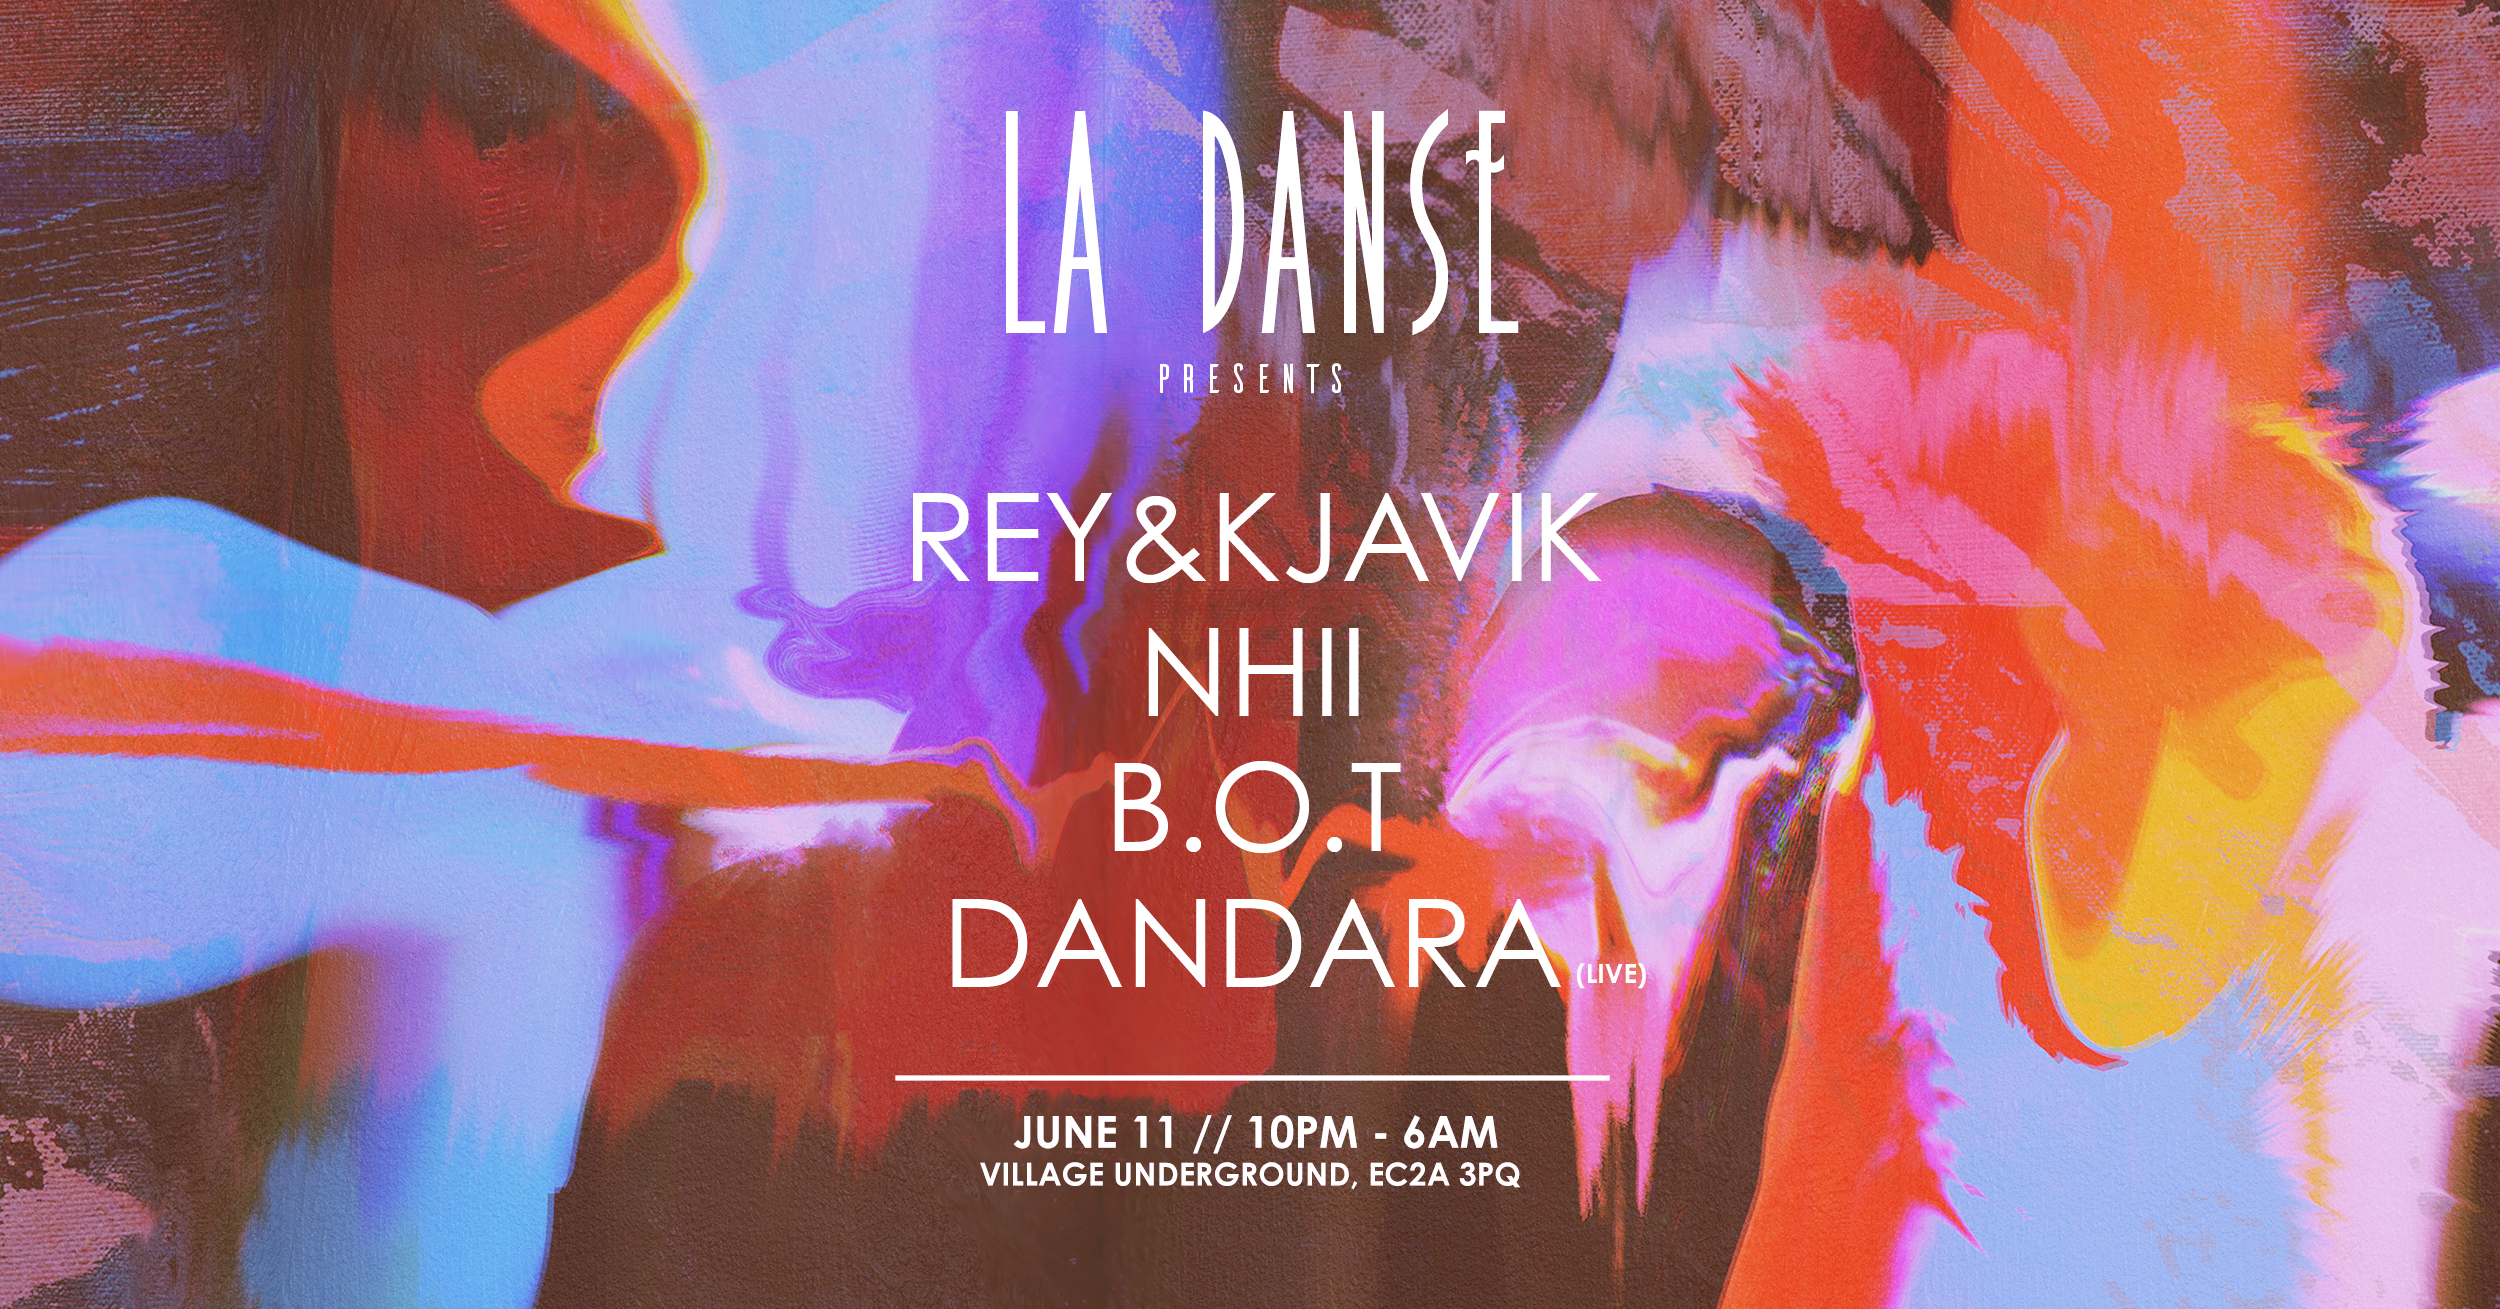 La Danse presents: Rey&Kjavik, Nhii, Dandara (Live) - Flyer front